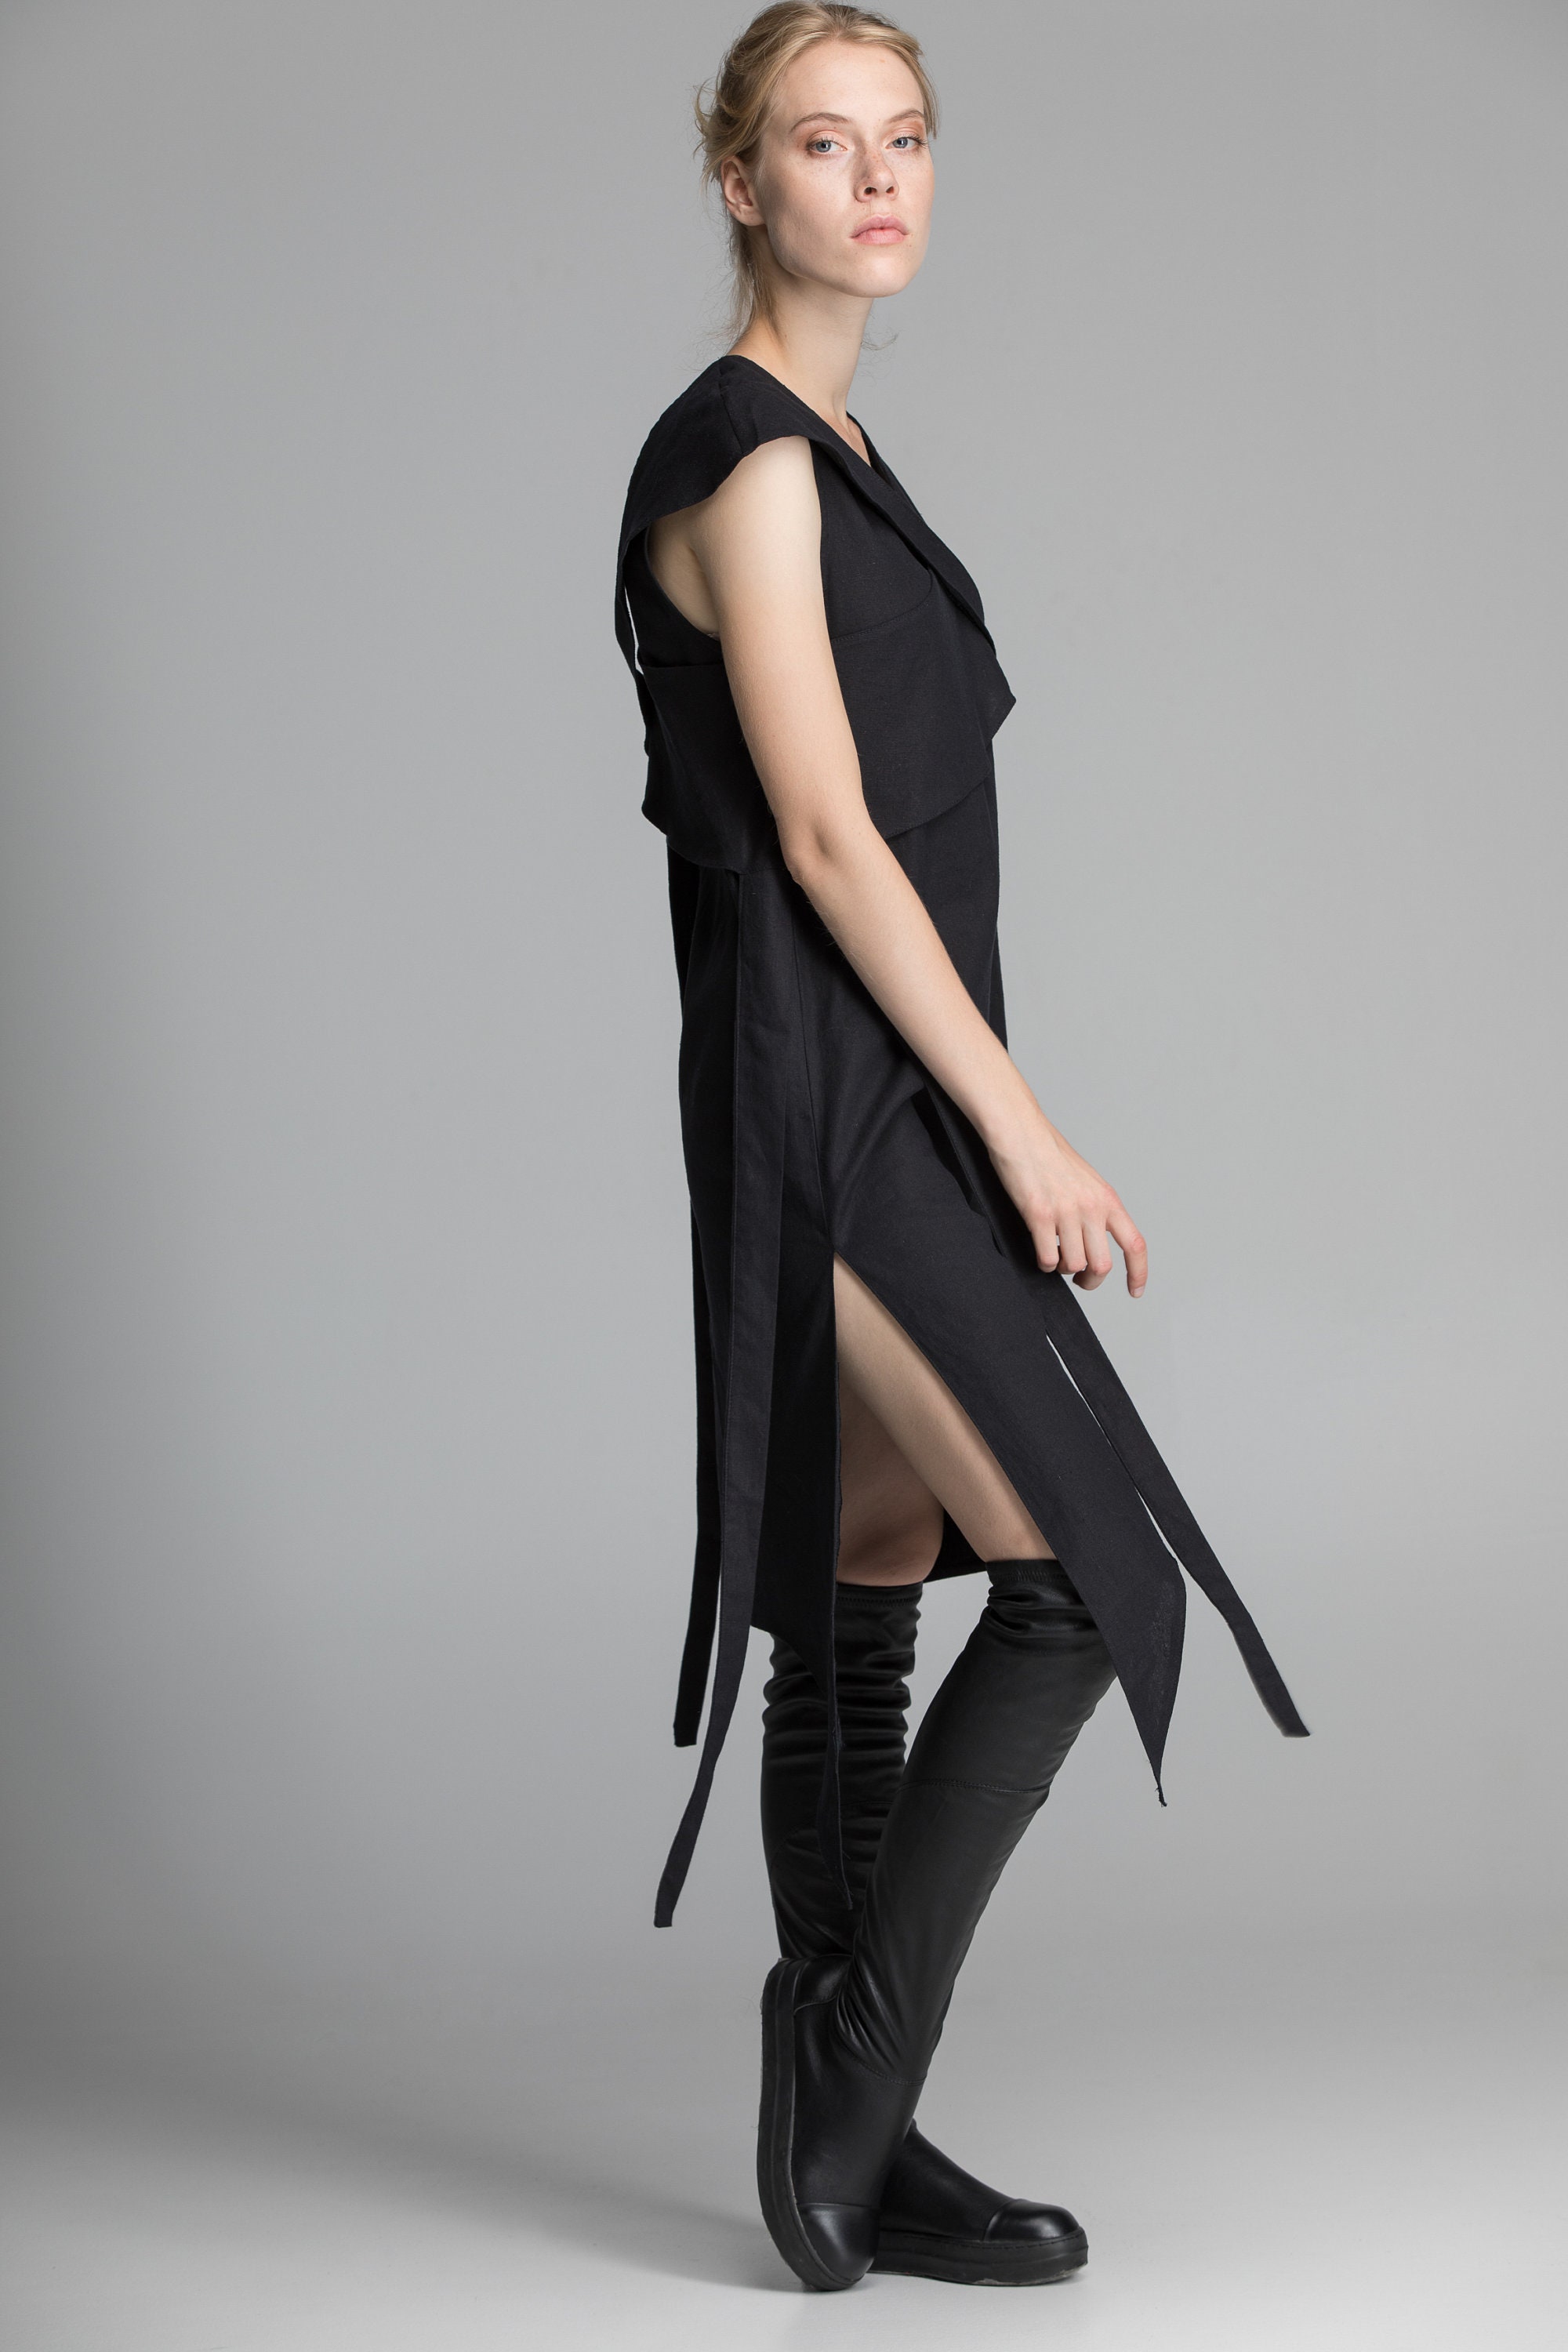 Linen black asymmetric dress v neck cut sleeveless tunic | Etsy